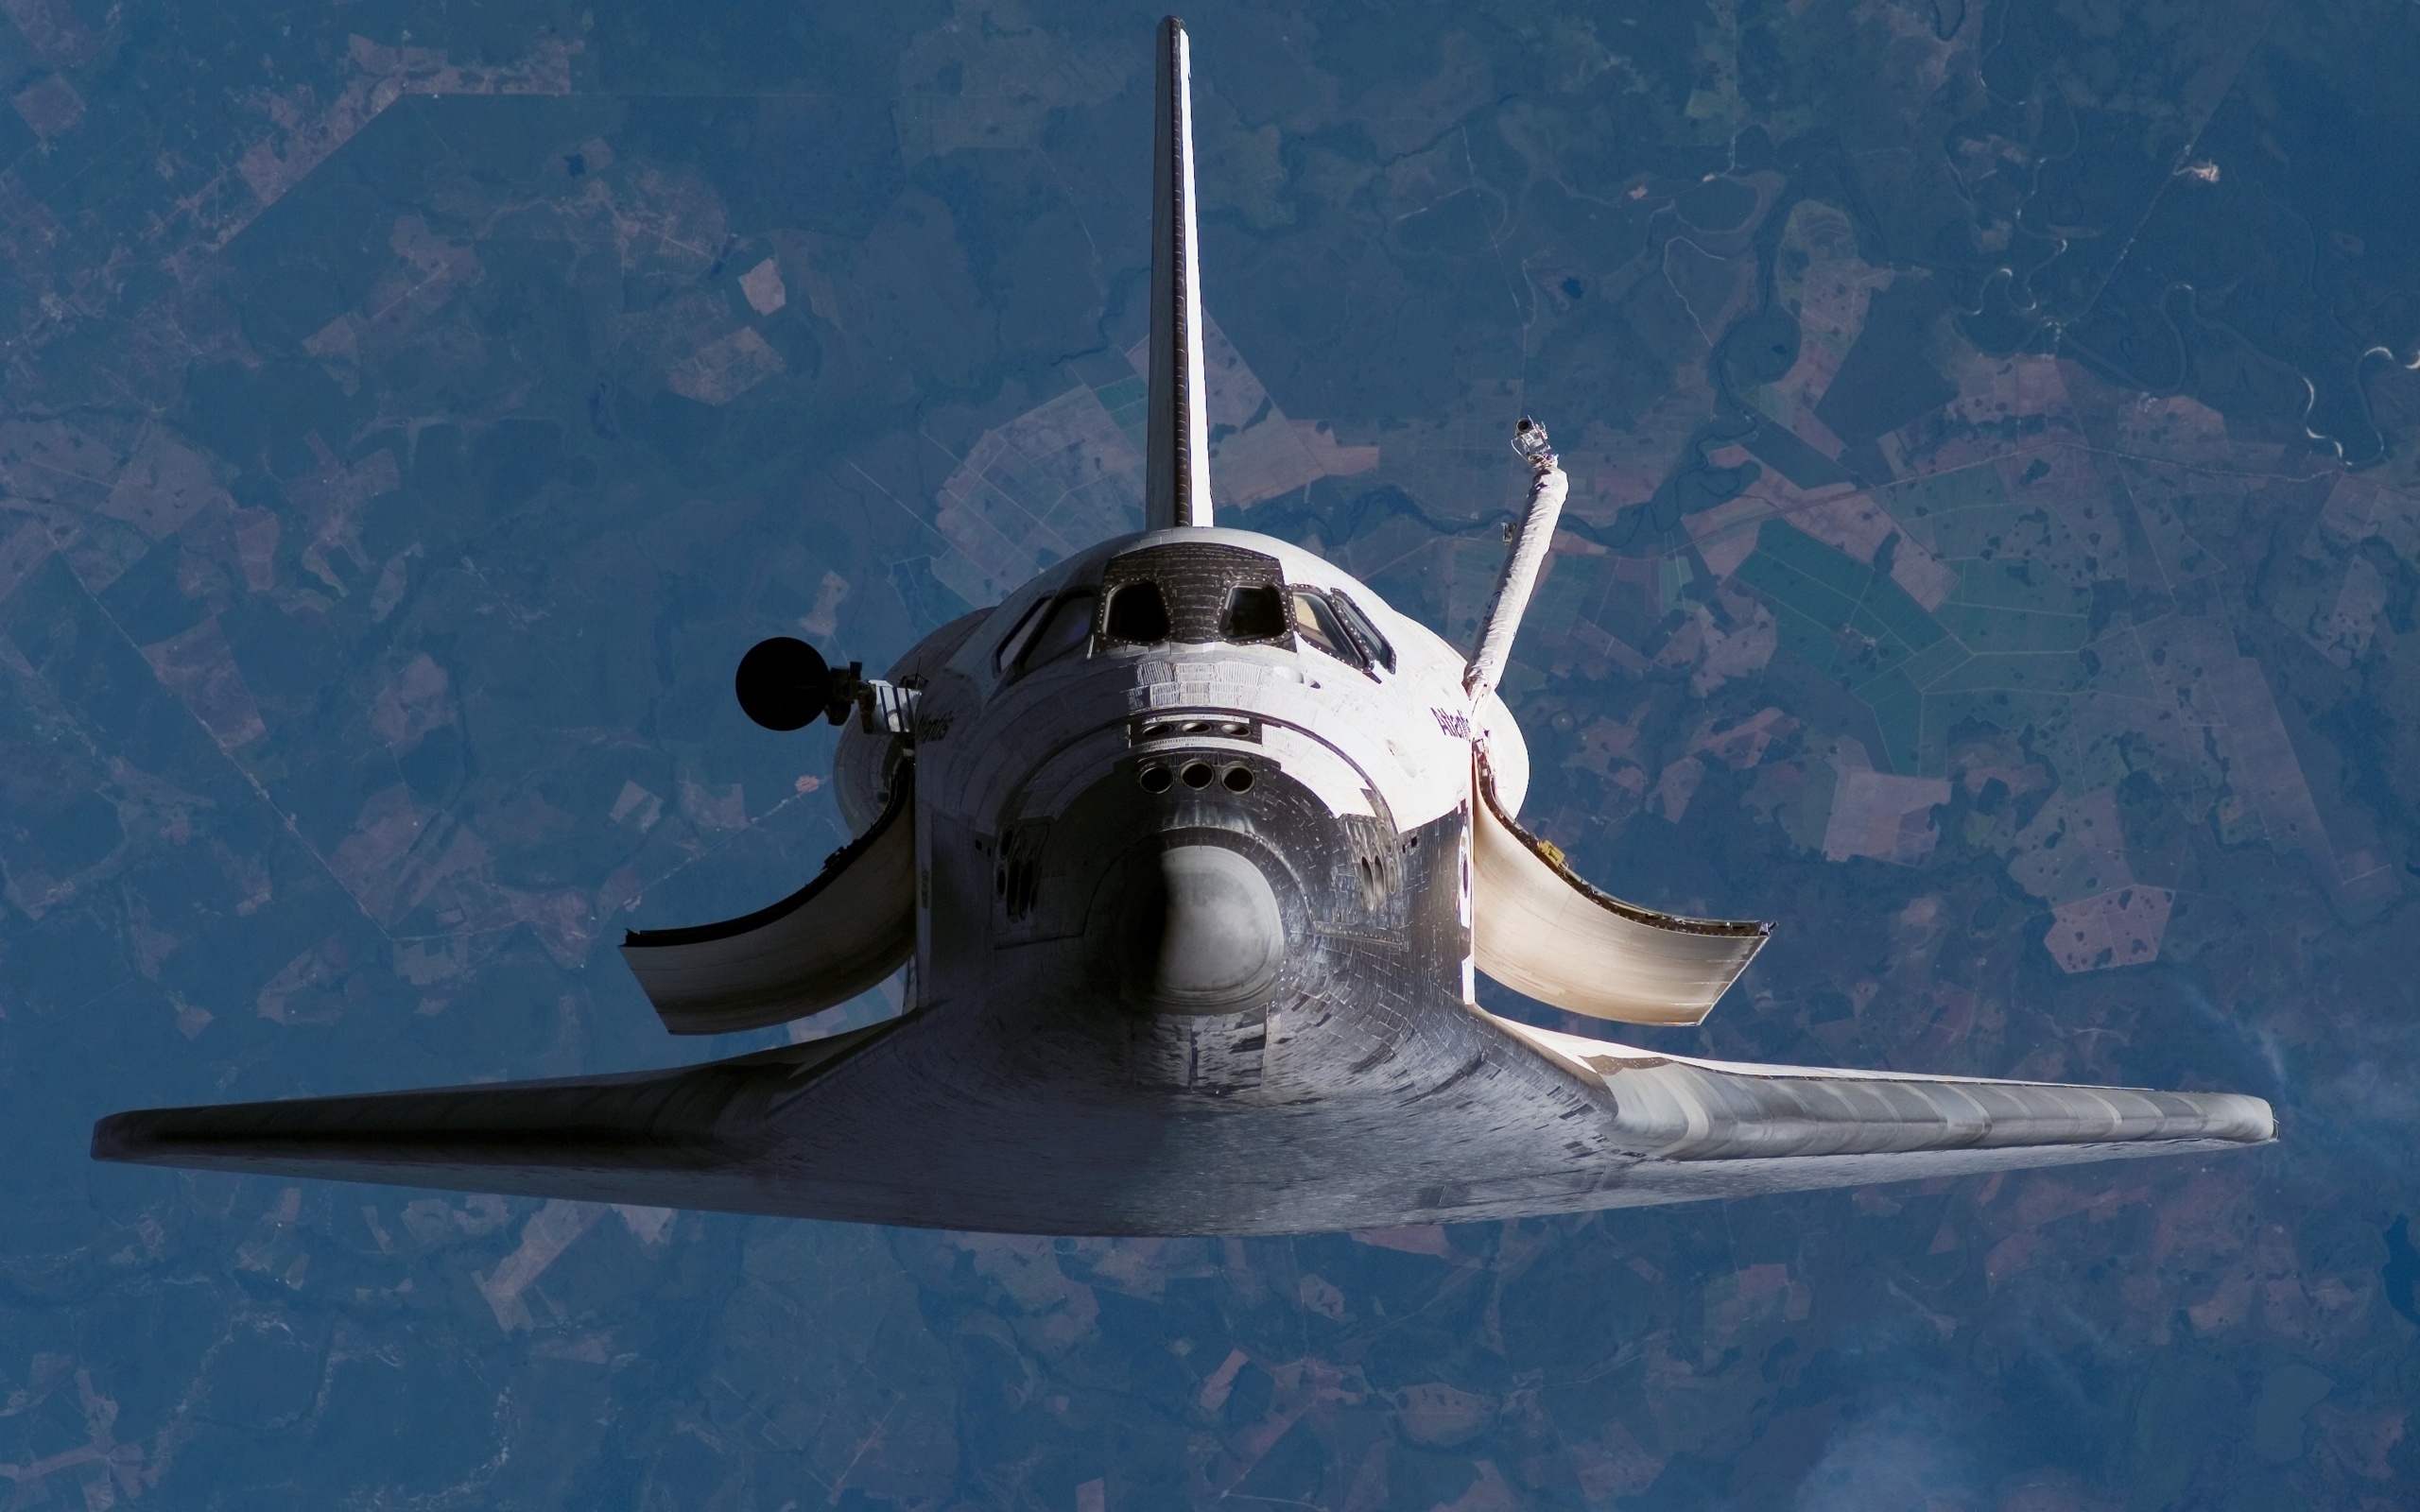 Space shuttle orbit for 2560 x 1600 widescreen resolution